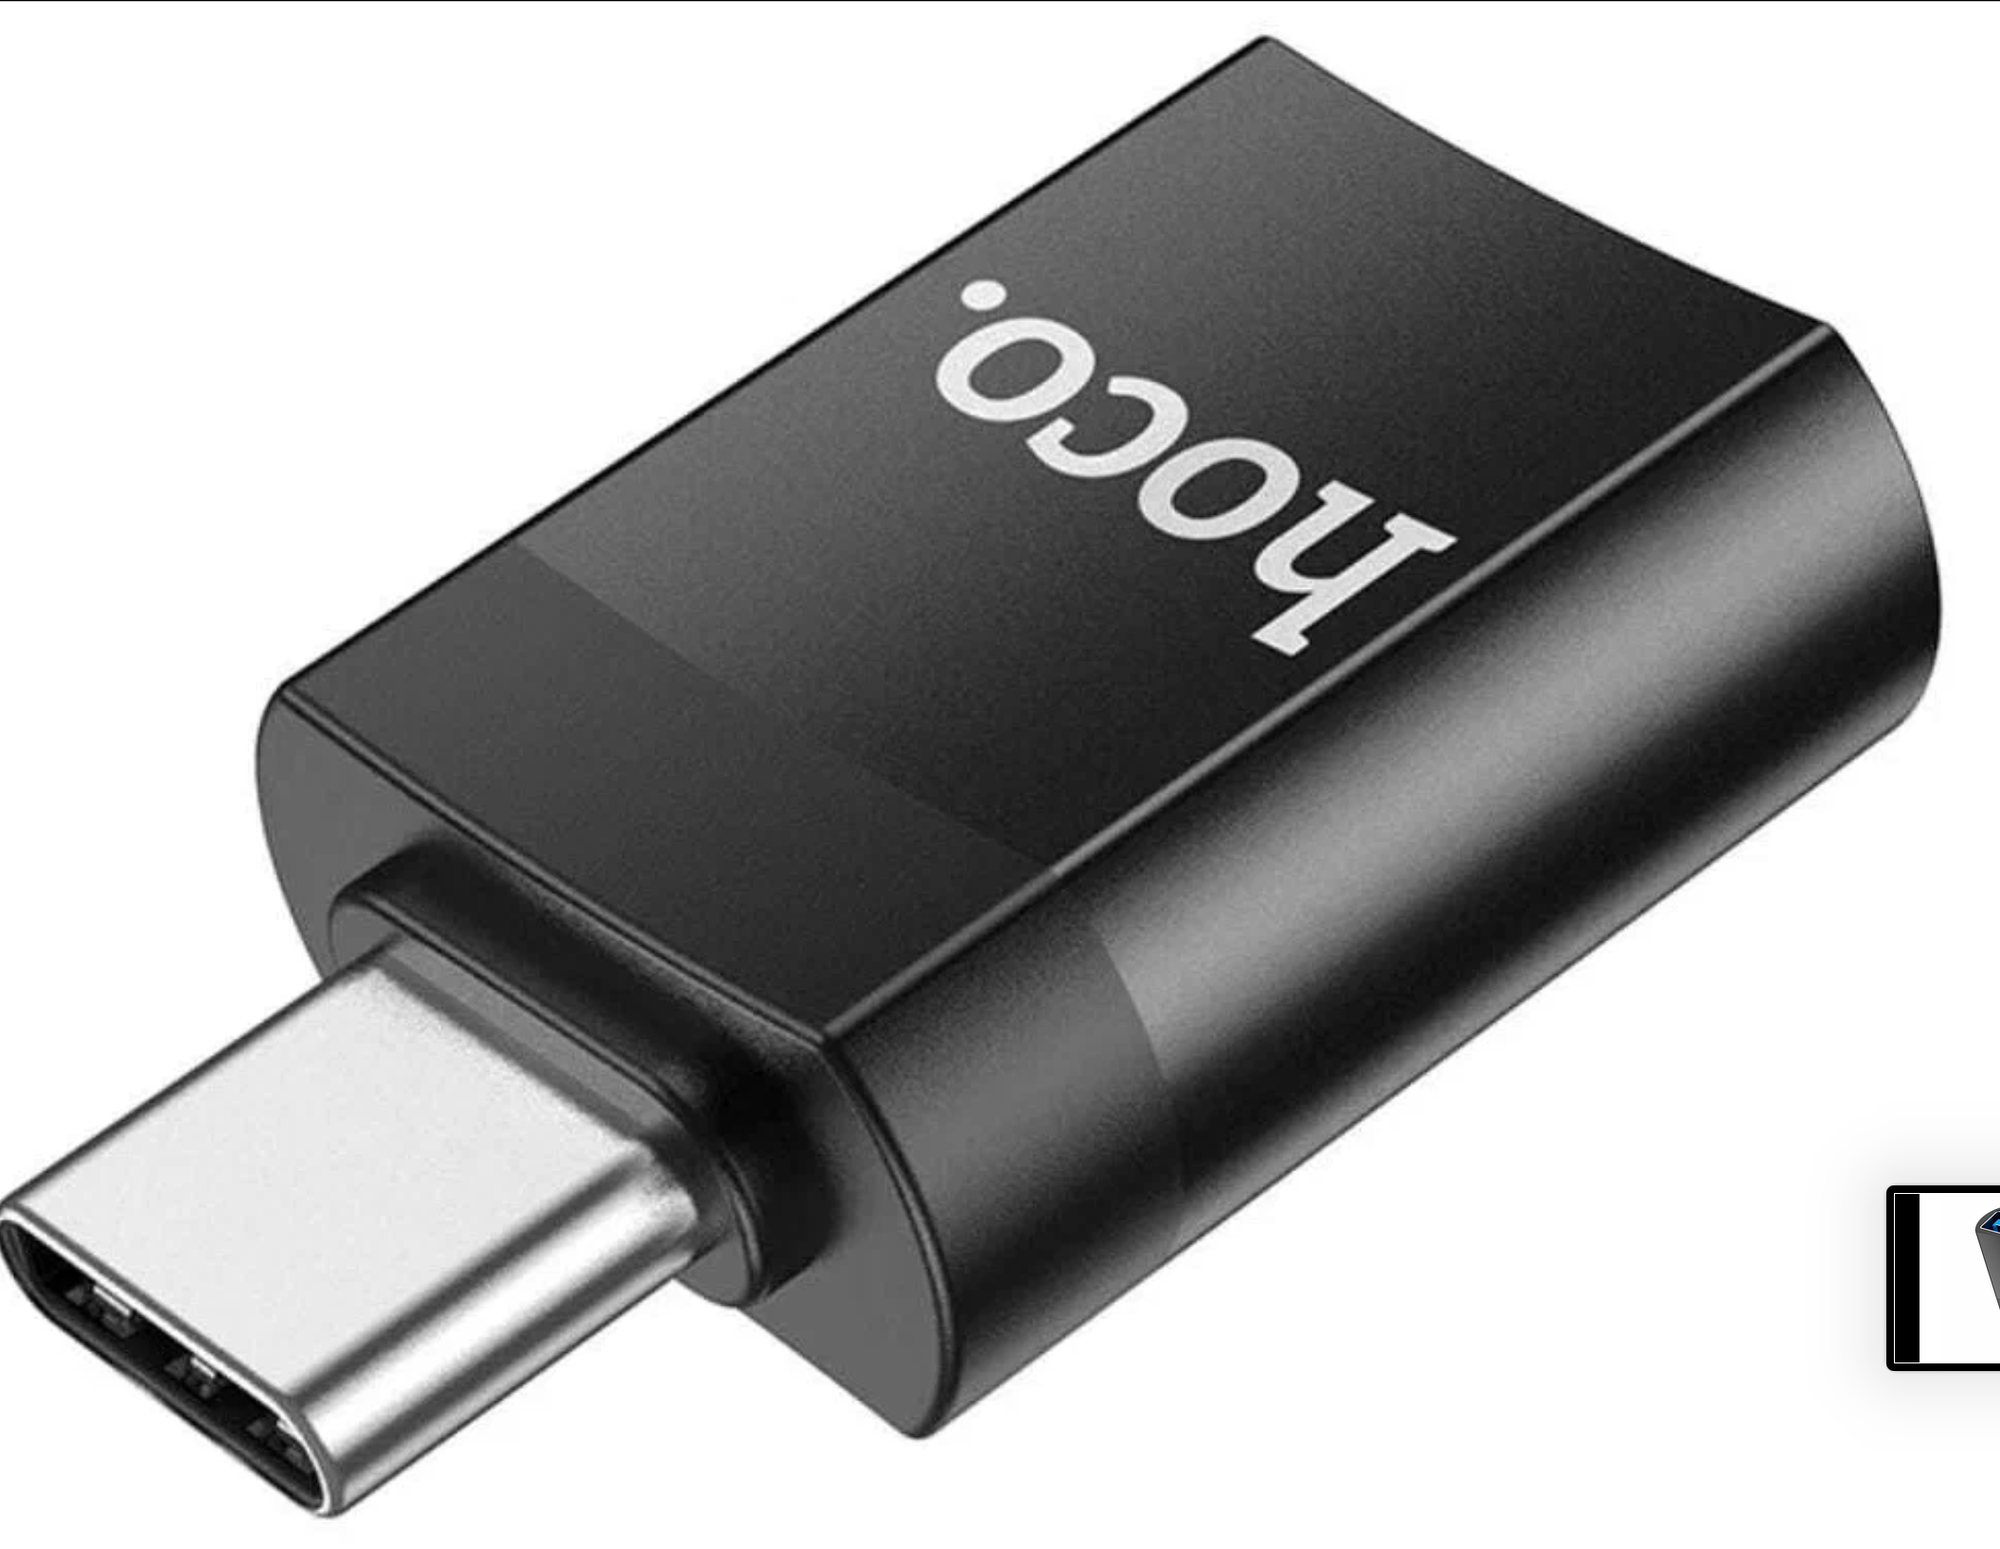 Аксессуар "Hoco USB 3 0" - переходник USB на Type-C